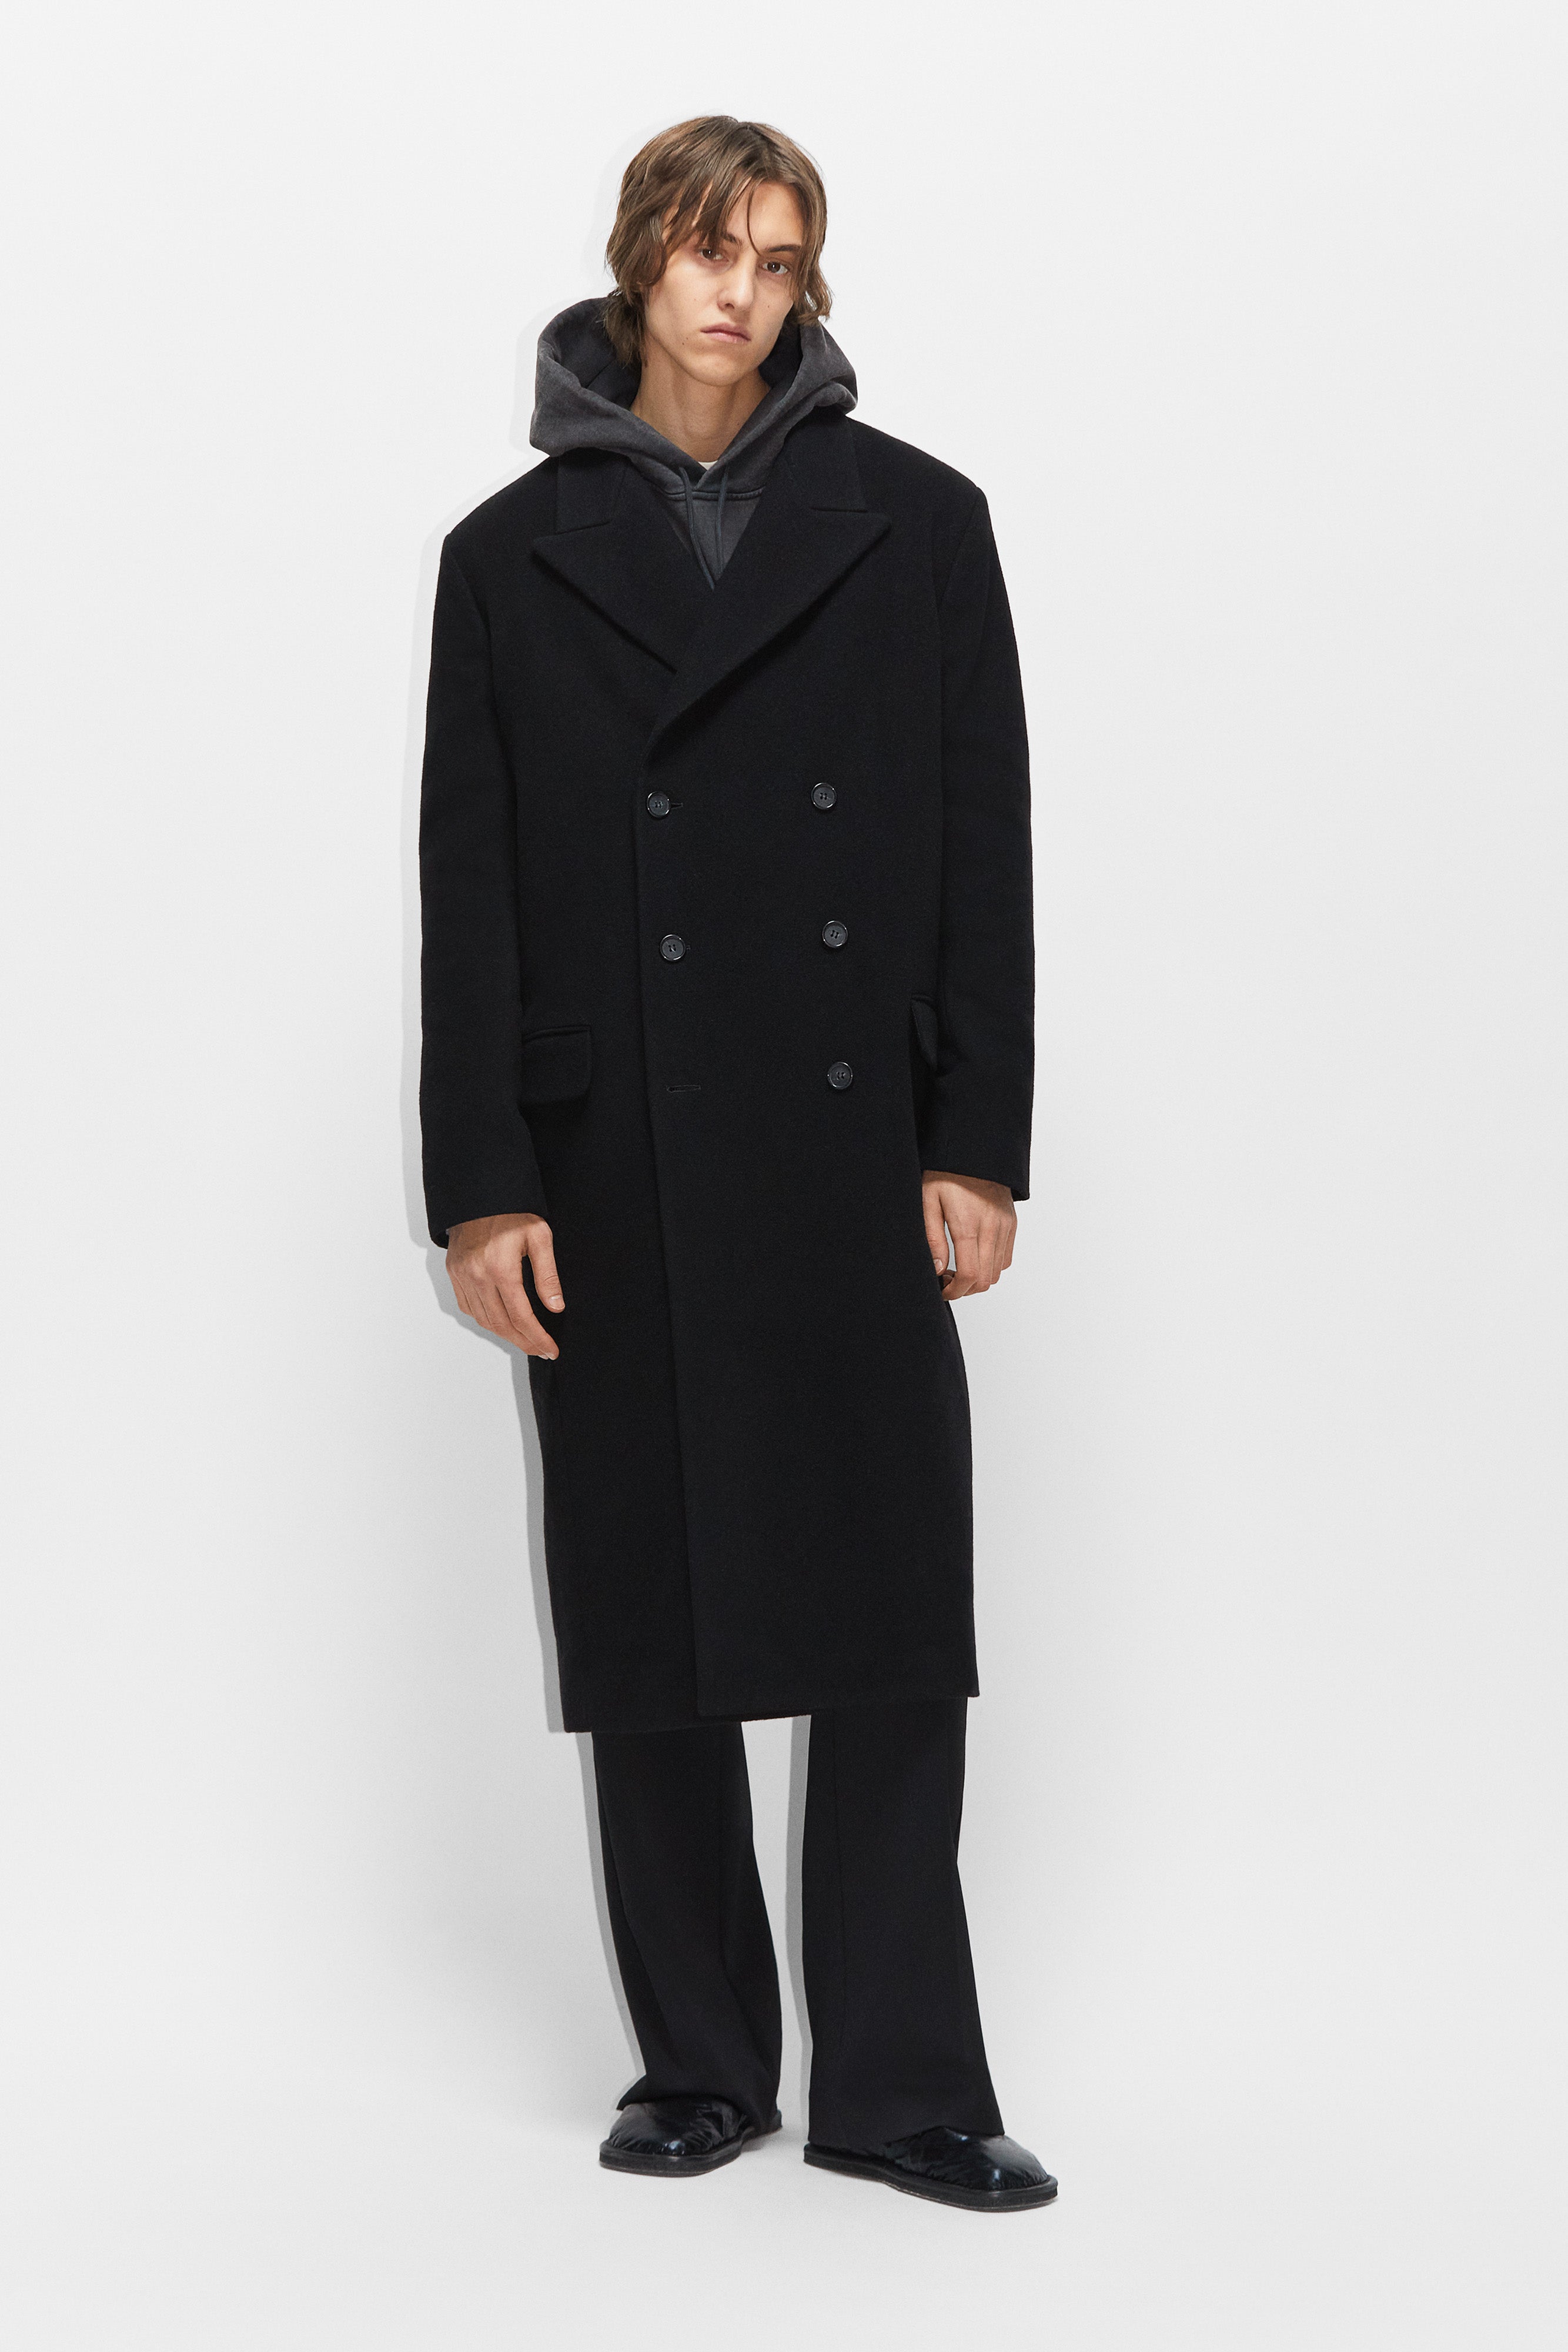 HOPE - Time Coat - Oversized Wool Coat in Black – HOPE STHLM